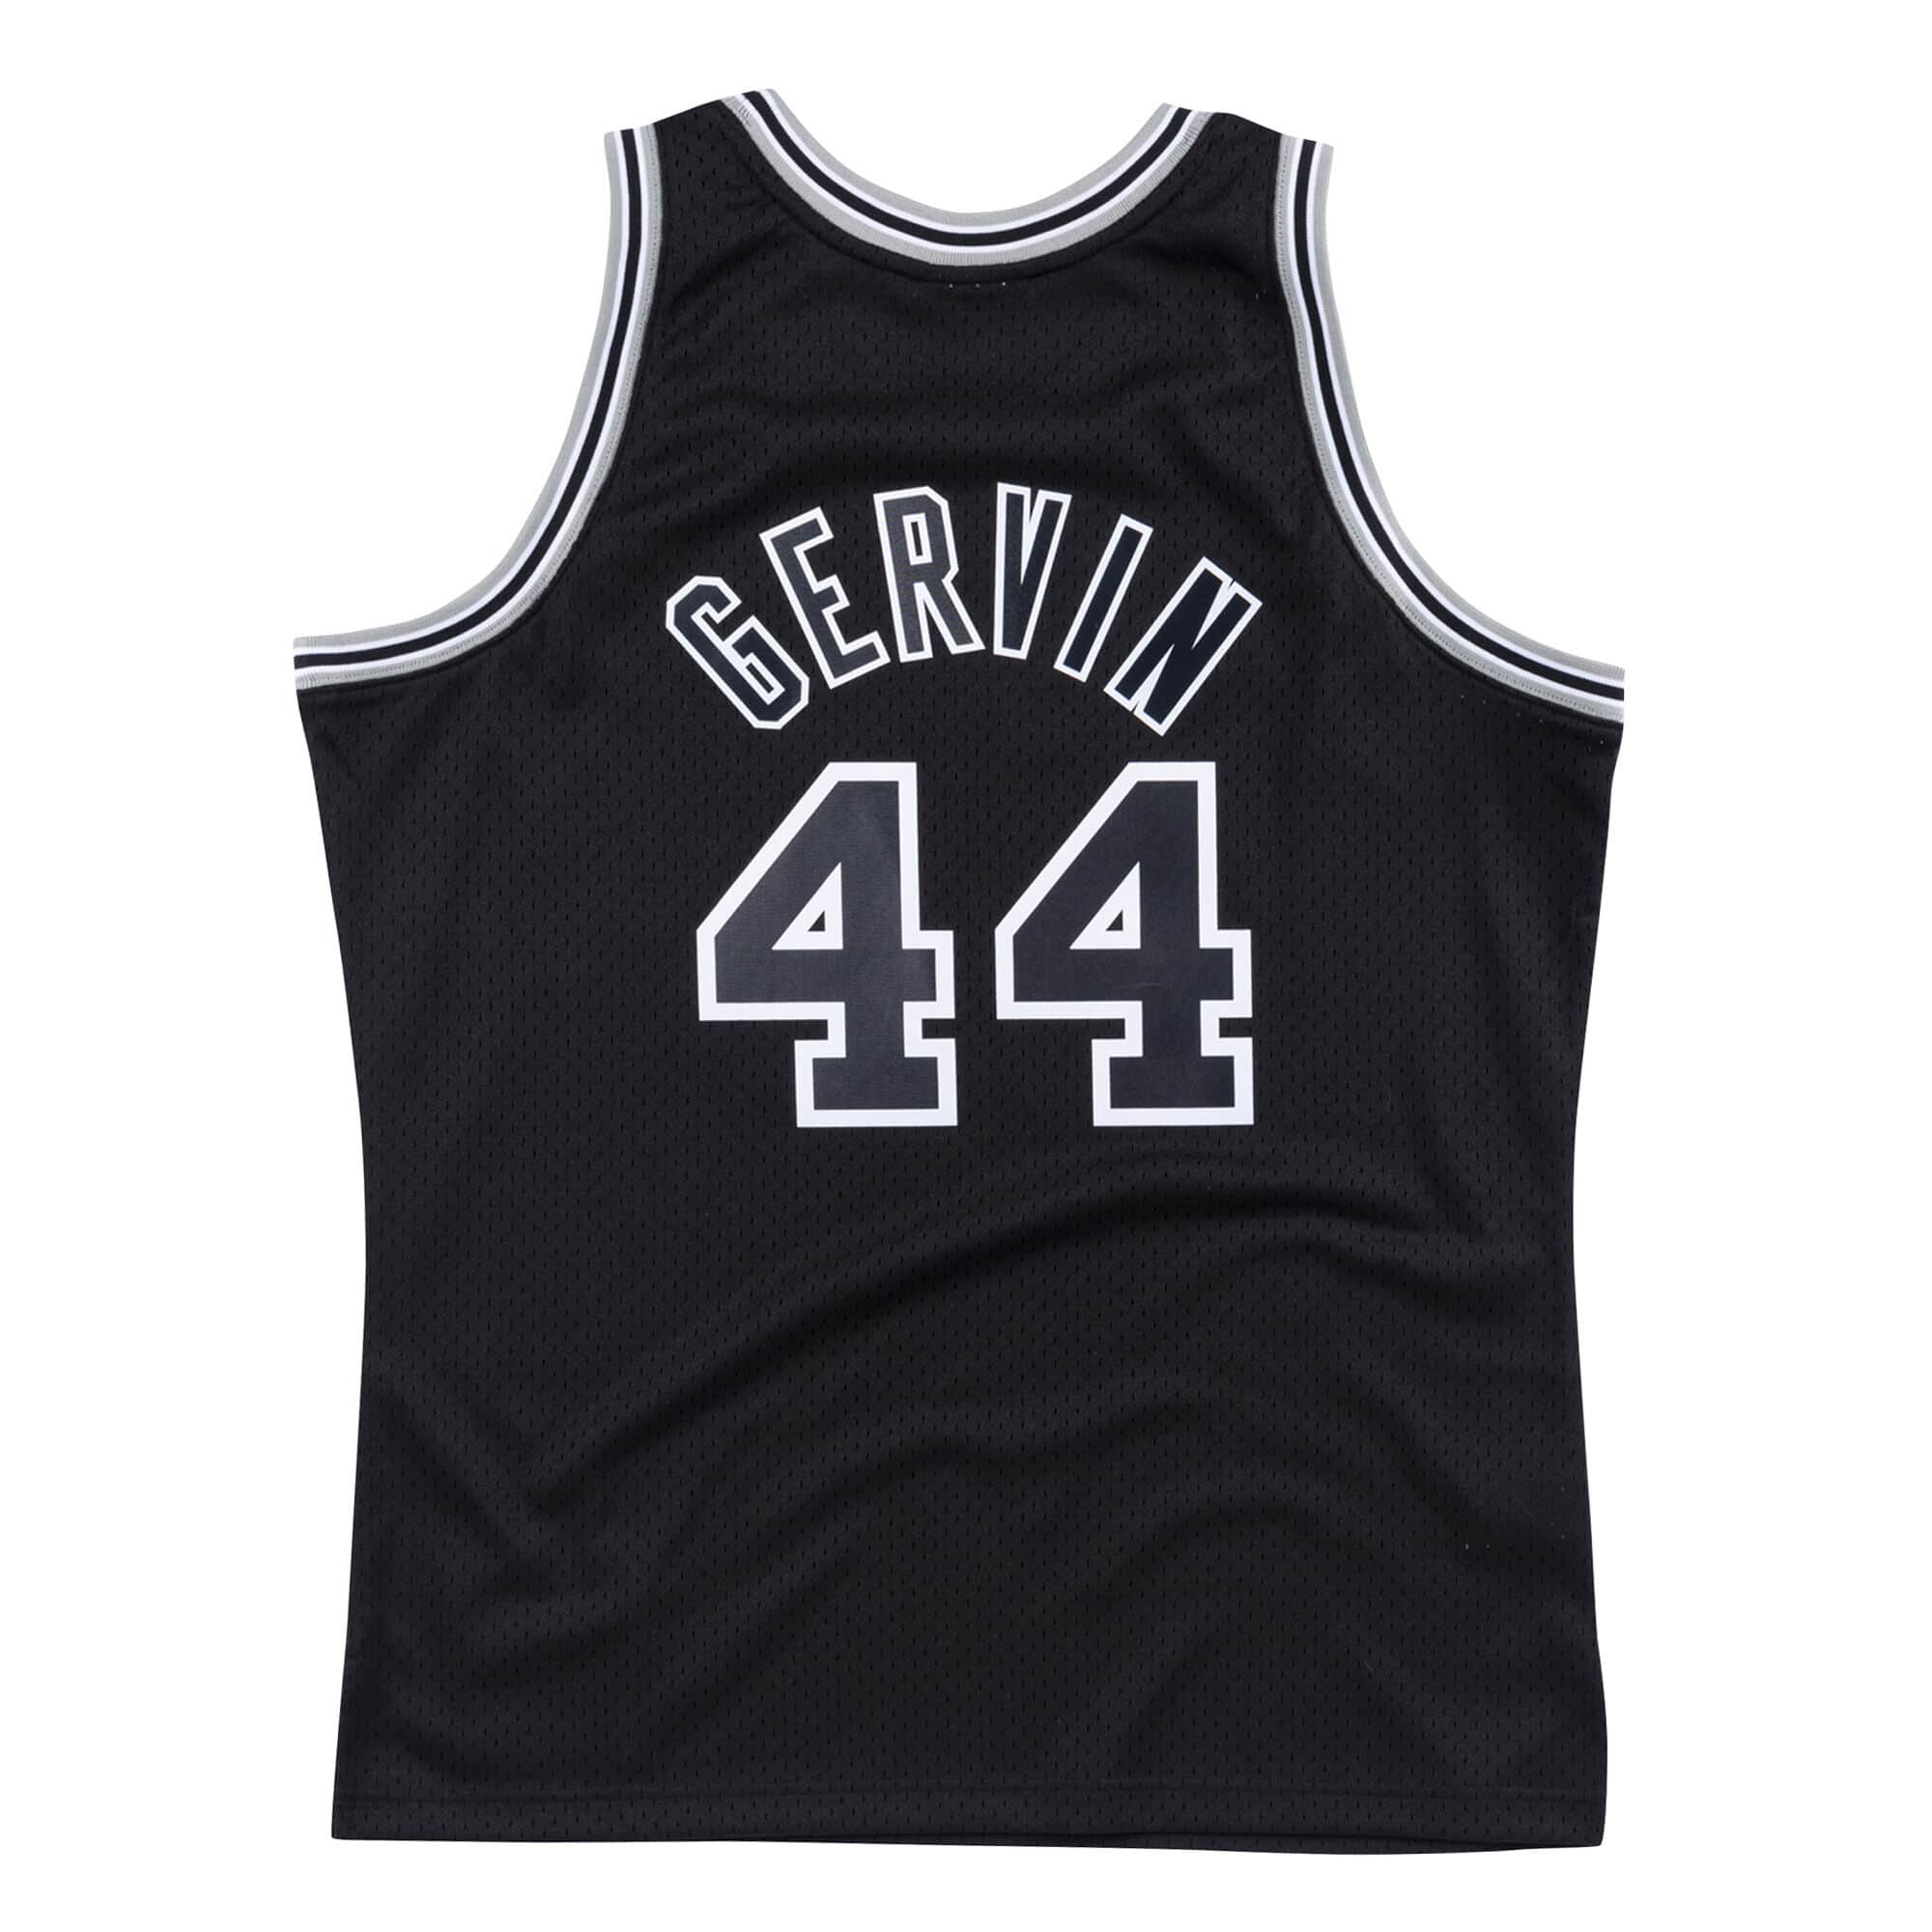 George Gervin Reebok 2x Spurs Jersey $100 for Sale in San Antonio, TX -  OfferUp